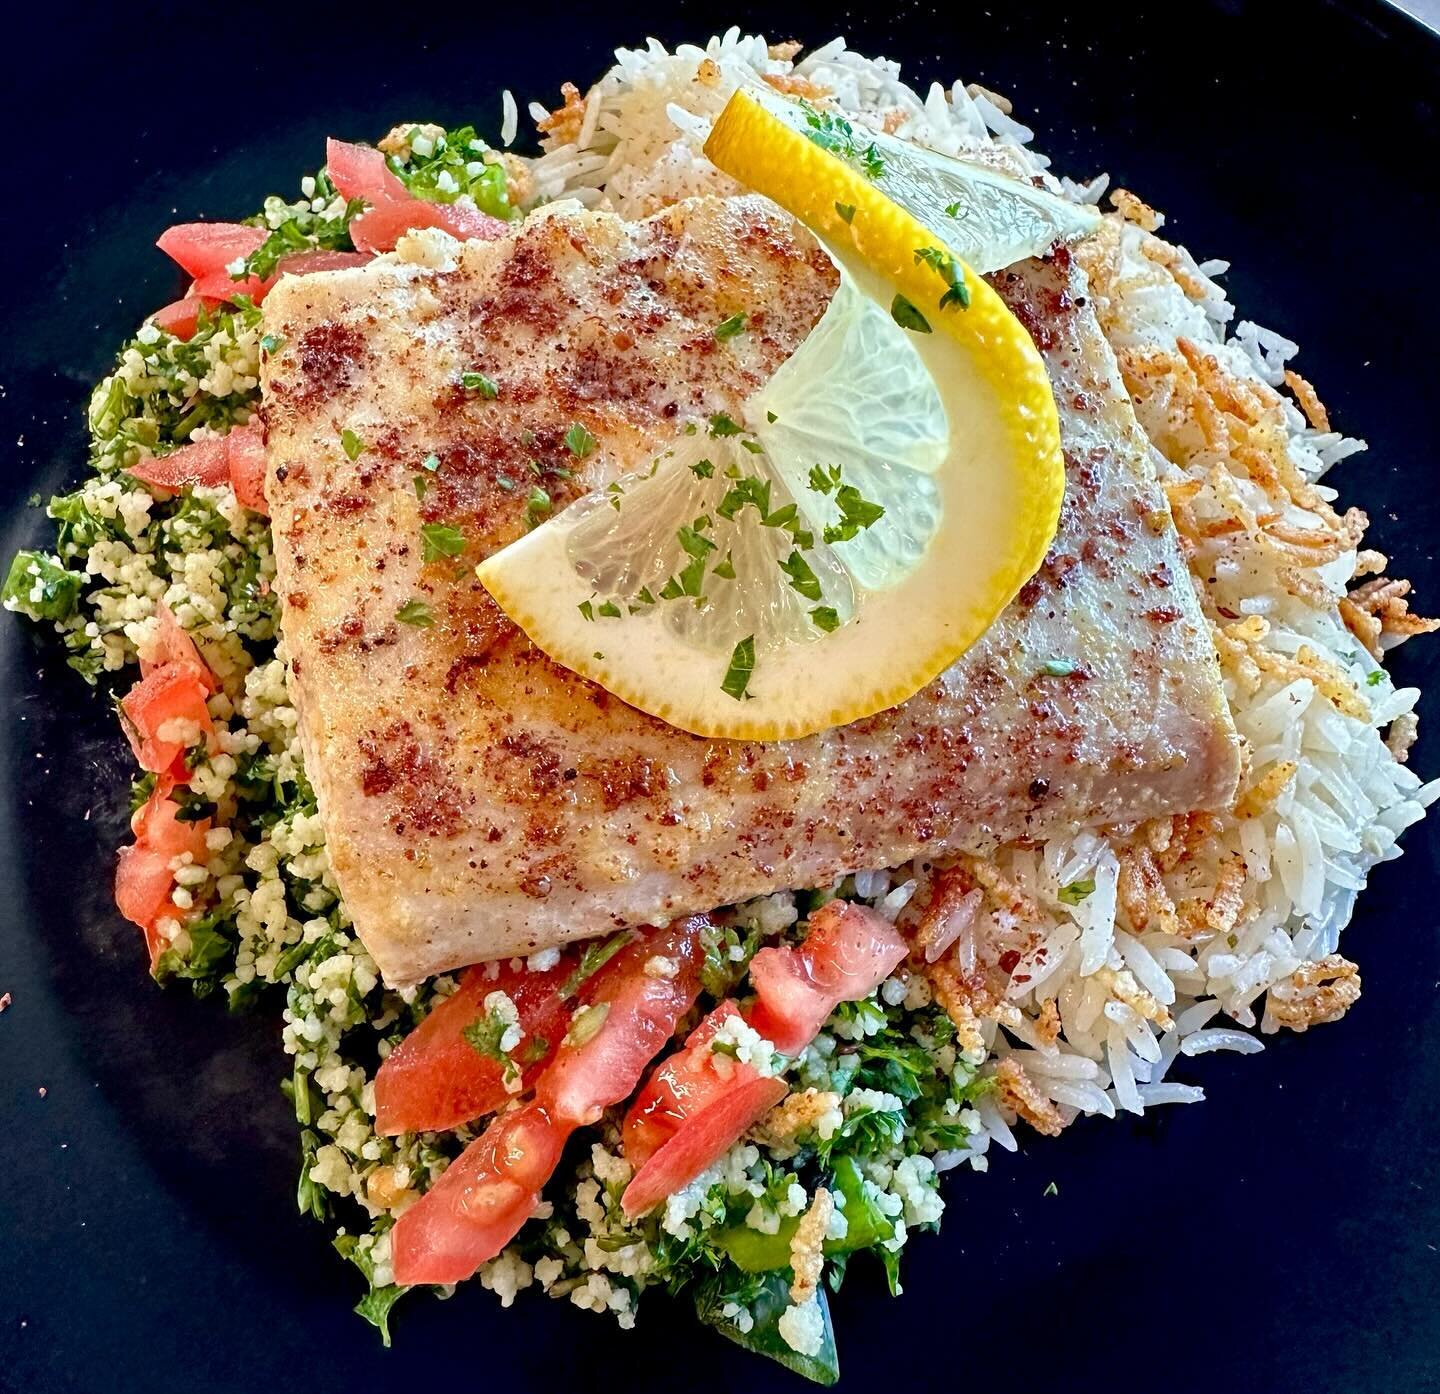 Special this week! 

Sumac-dusted Mahi-Mahi Plate $19.95
-served with tabbouleh salad, crispy brown butter orzo, rice pilaf and tahini sauce. @wailukufoodtrucks 
.
.
.
.
.
.
.
.
.
.
#mediterraneanfood #fish #mahimahi #tabbouleh #middleeasternfood #fa